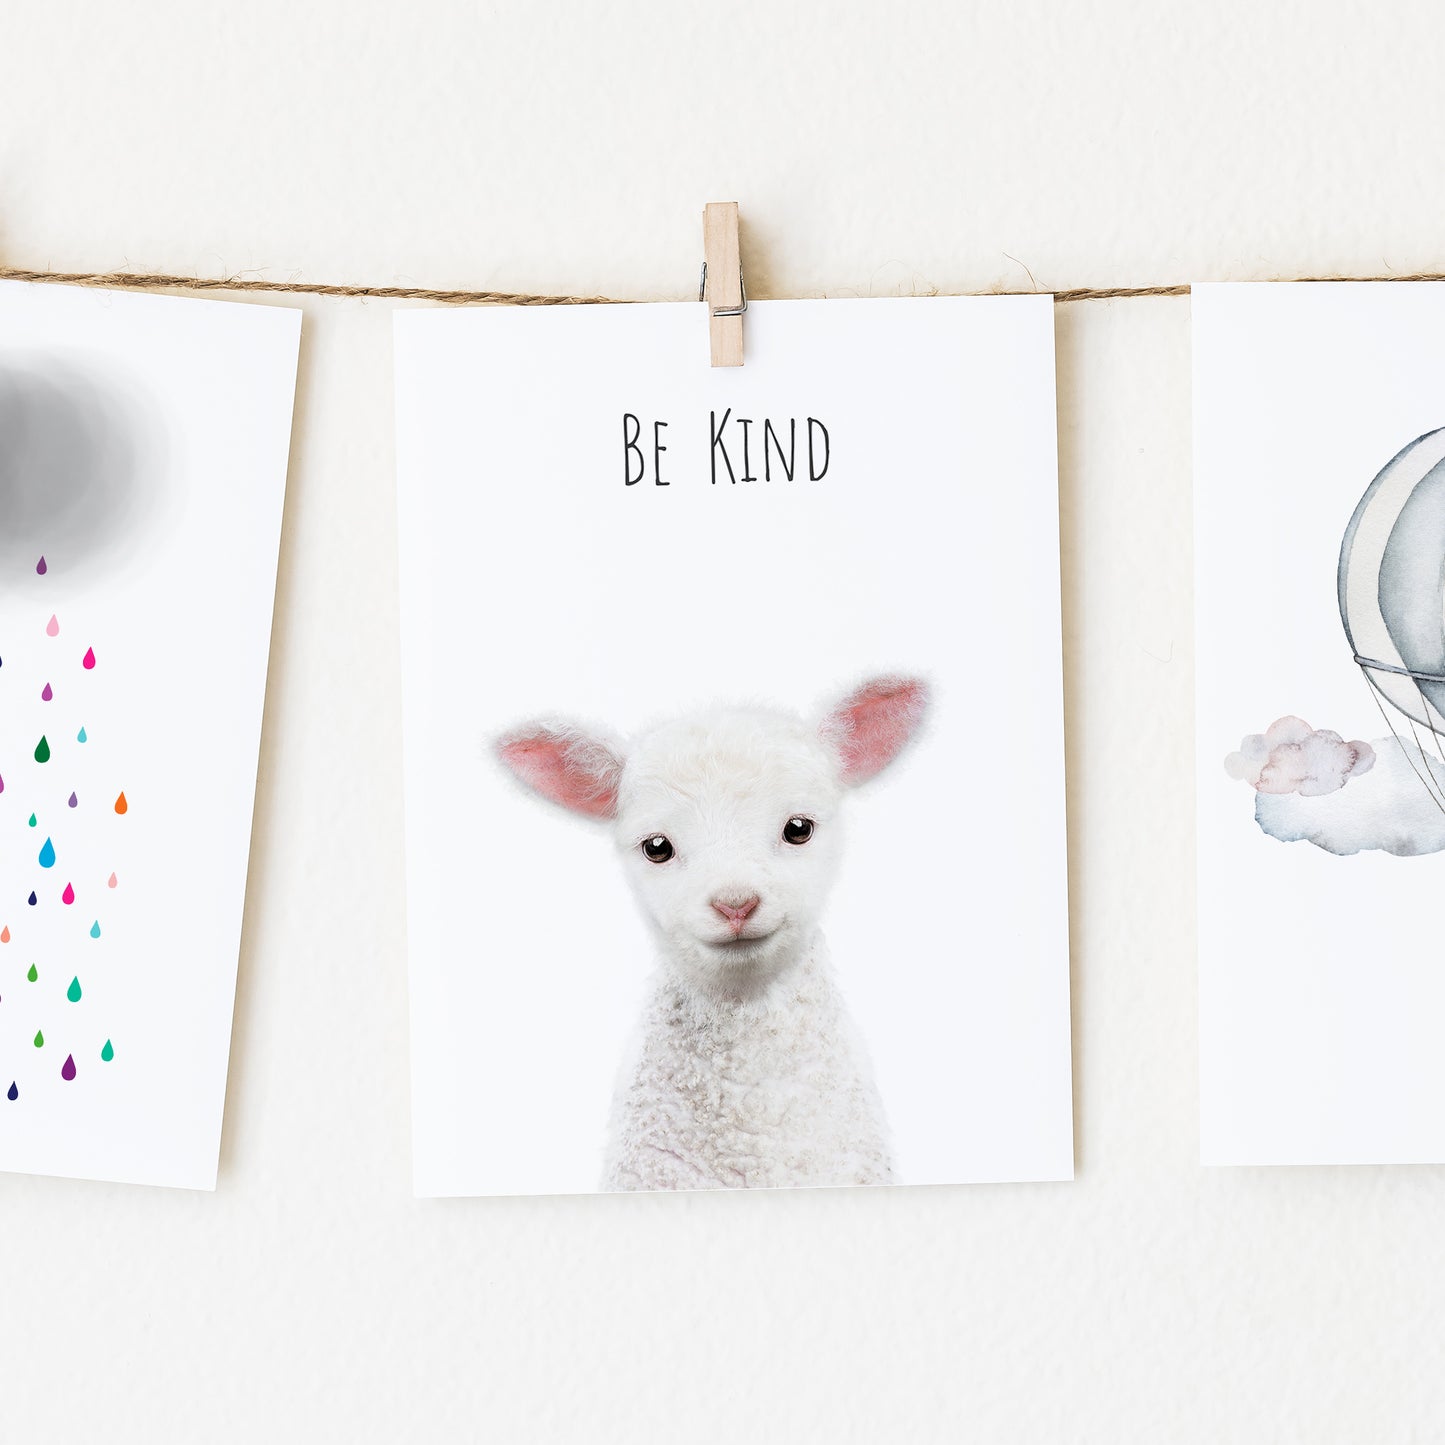 Lamb Be Kind Inspirational Nursery Wall Art